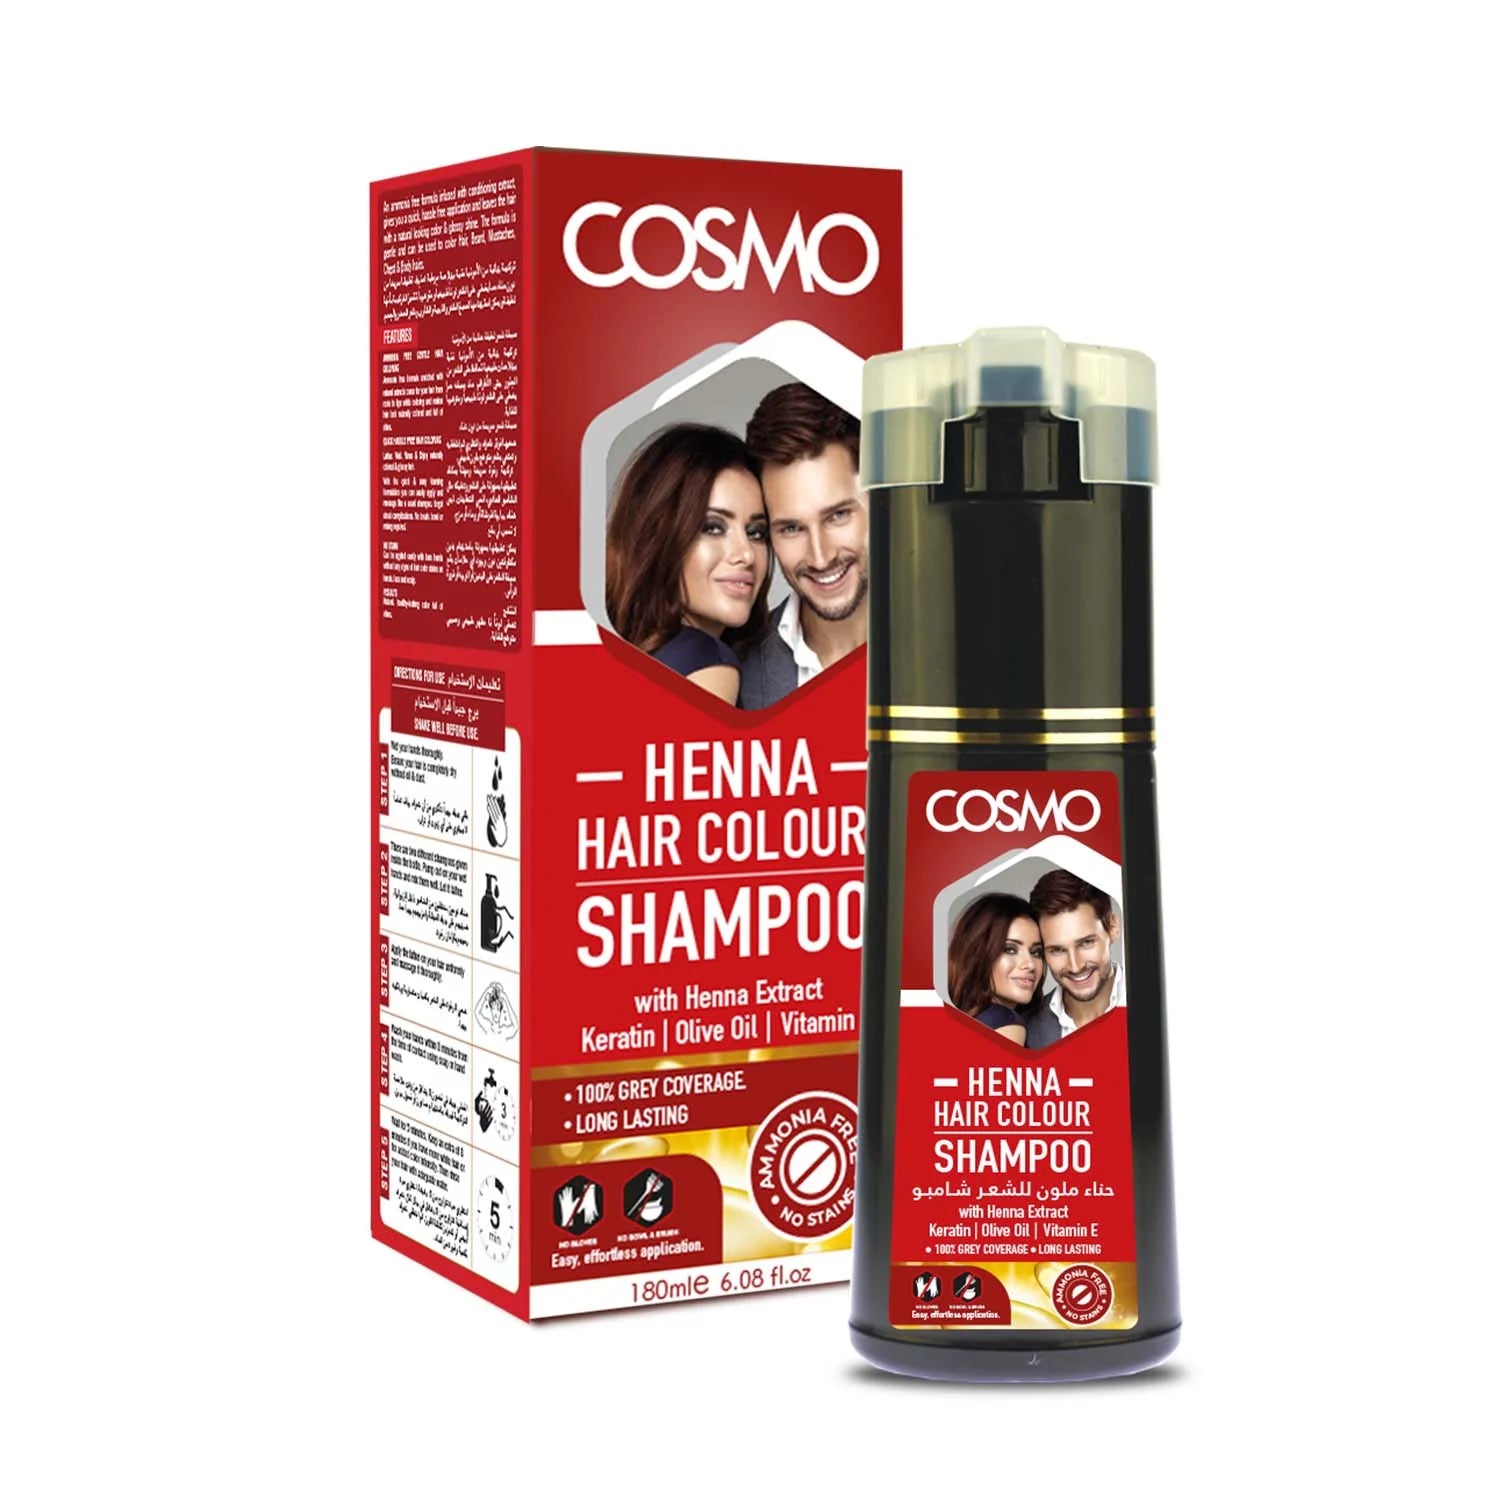 E11 Store, Cosmo Shampoo Hair Color, Henna